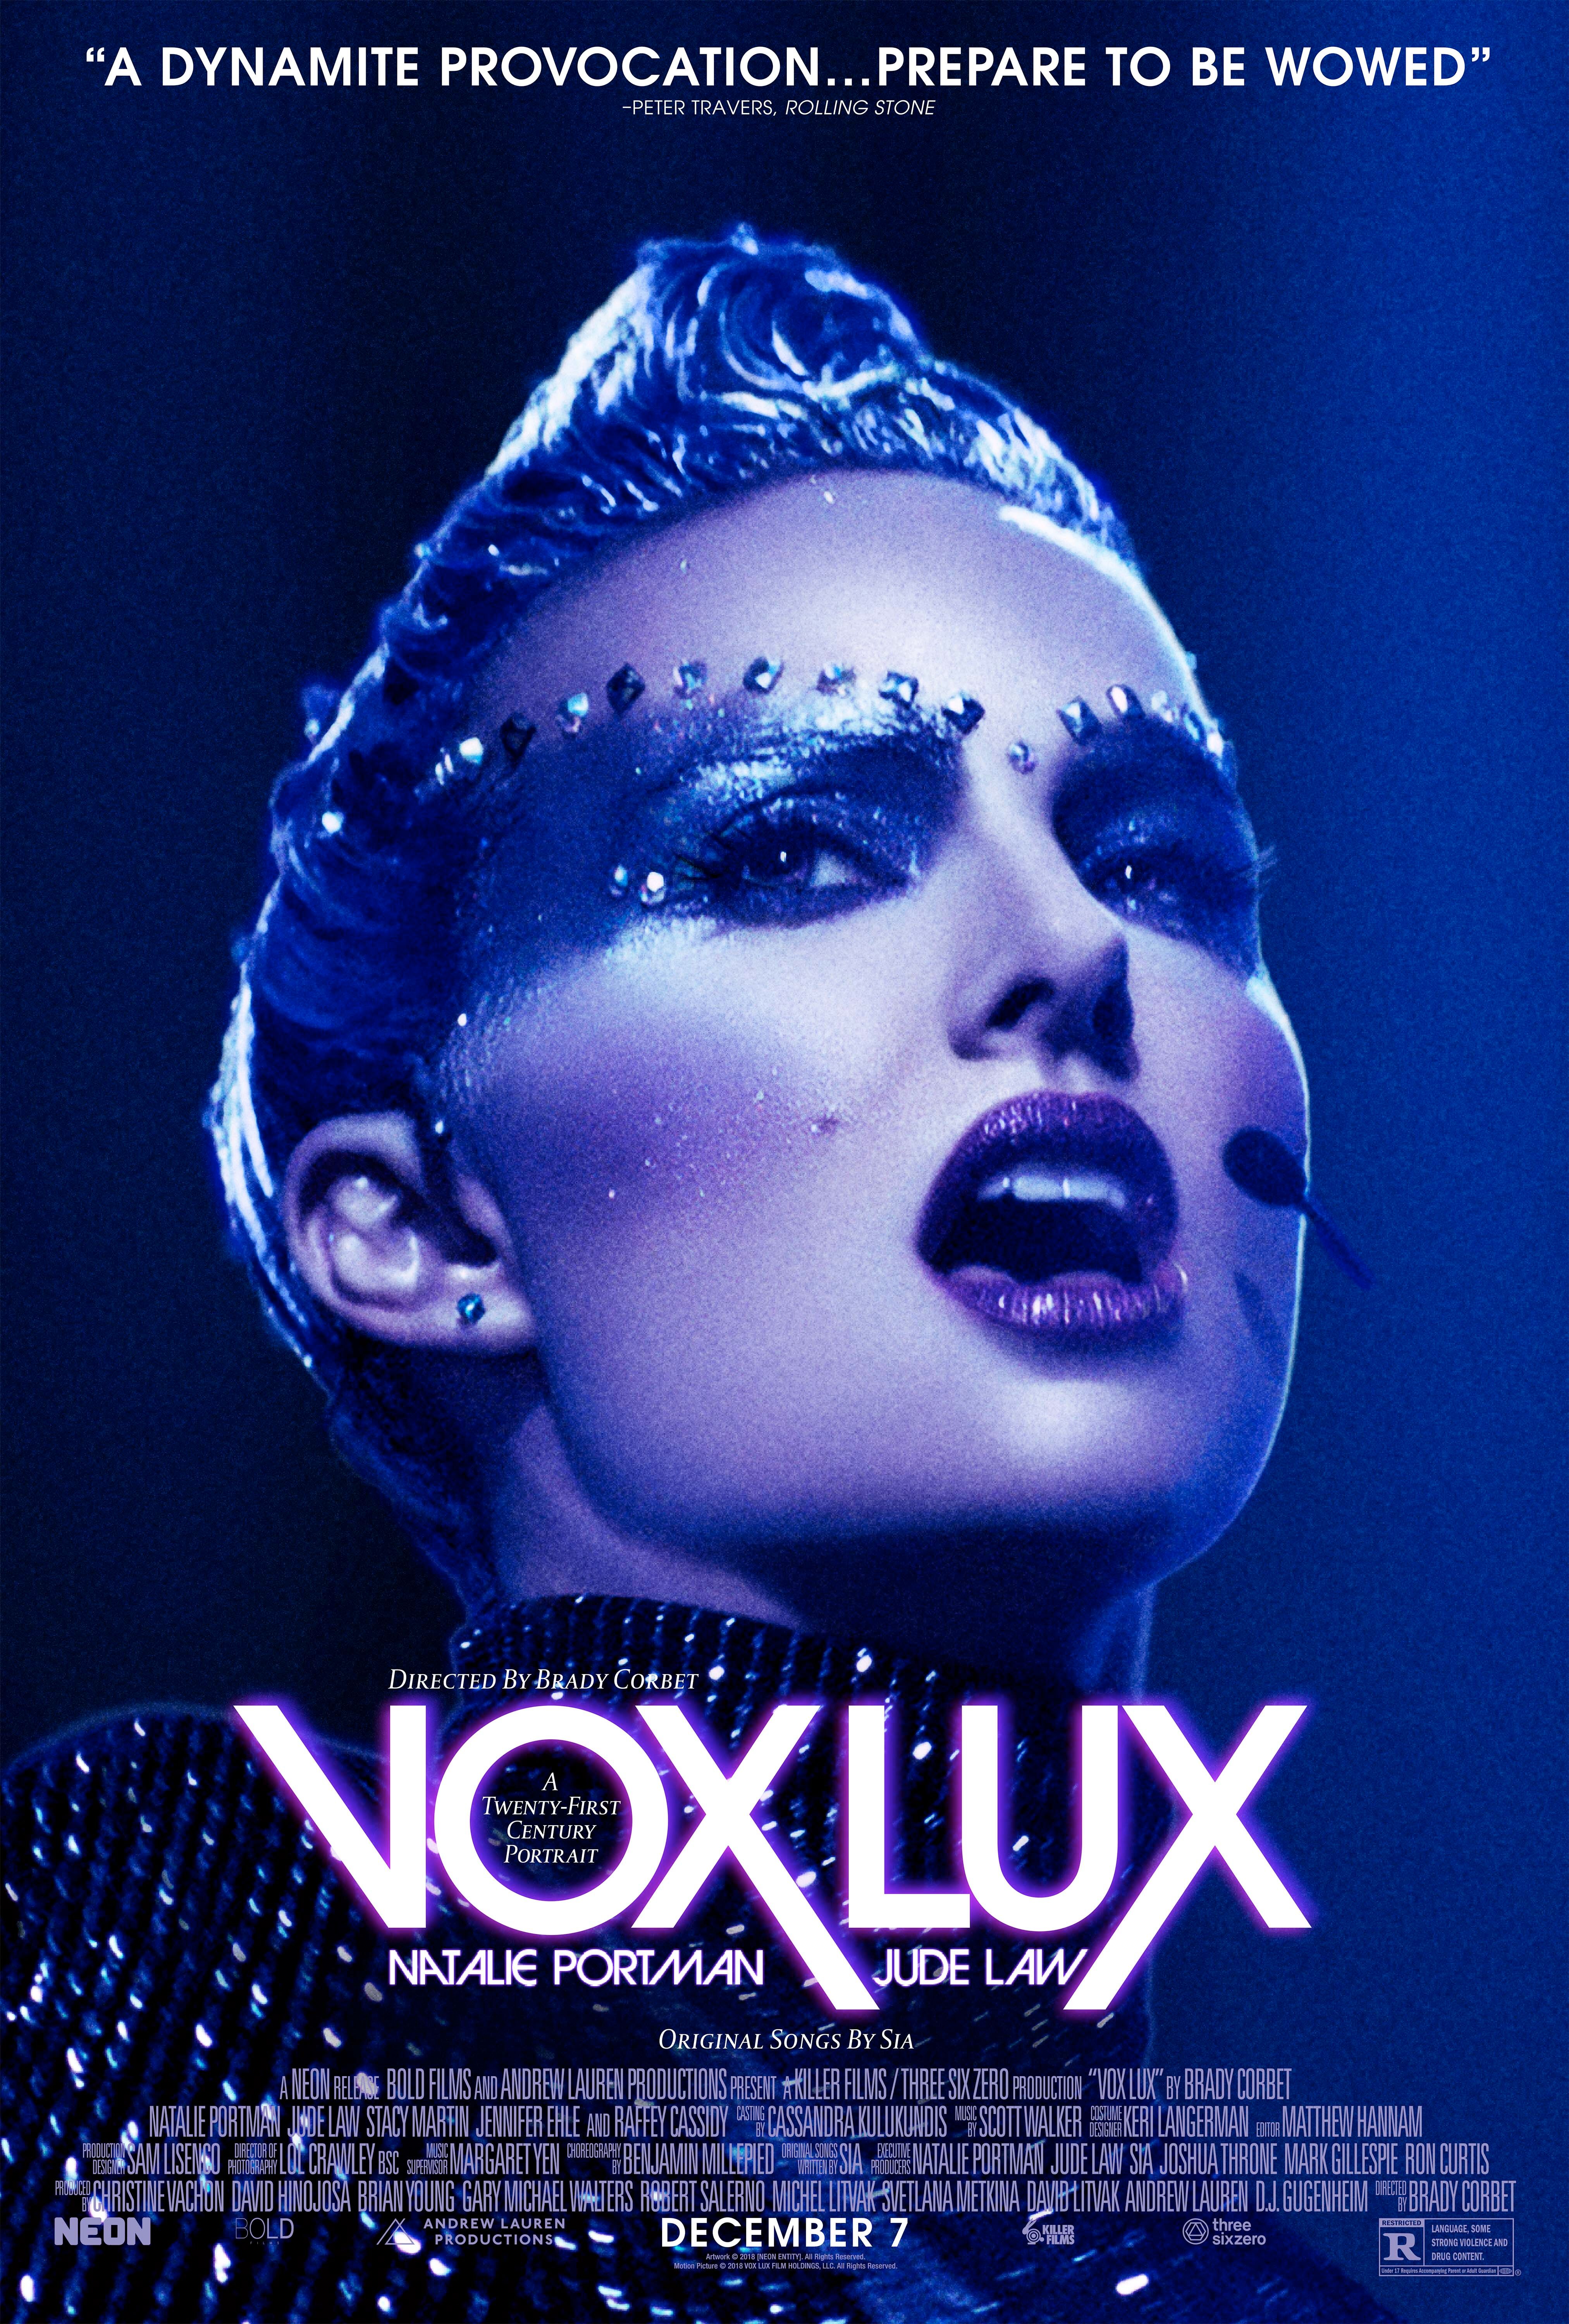 Nonton film Vox Lux layarkaca21 indoxx1 ganool online streaming terbaru